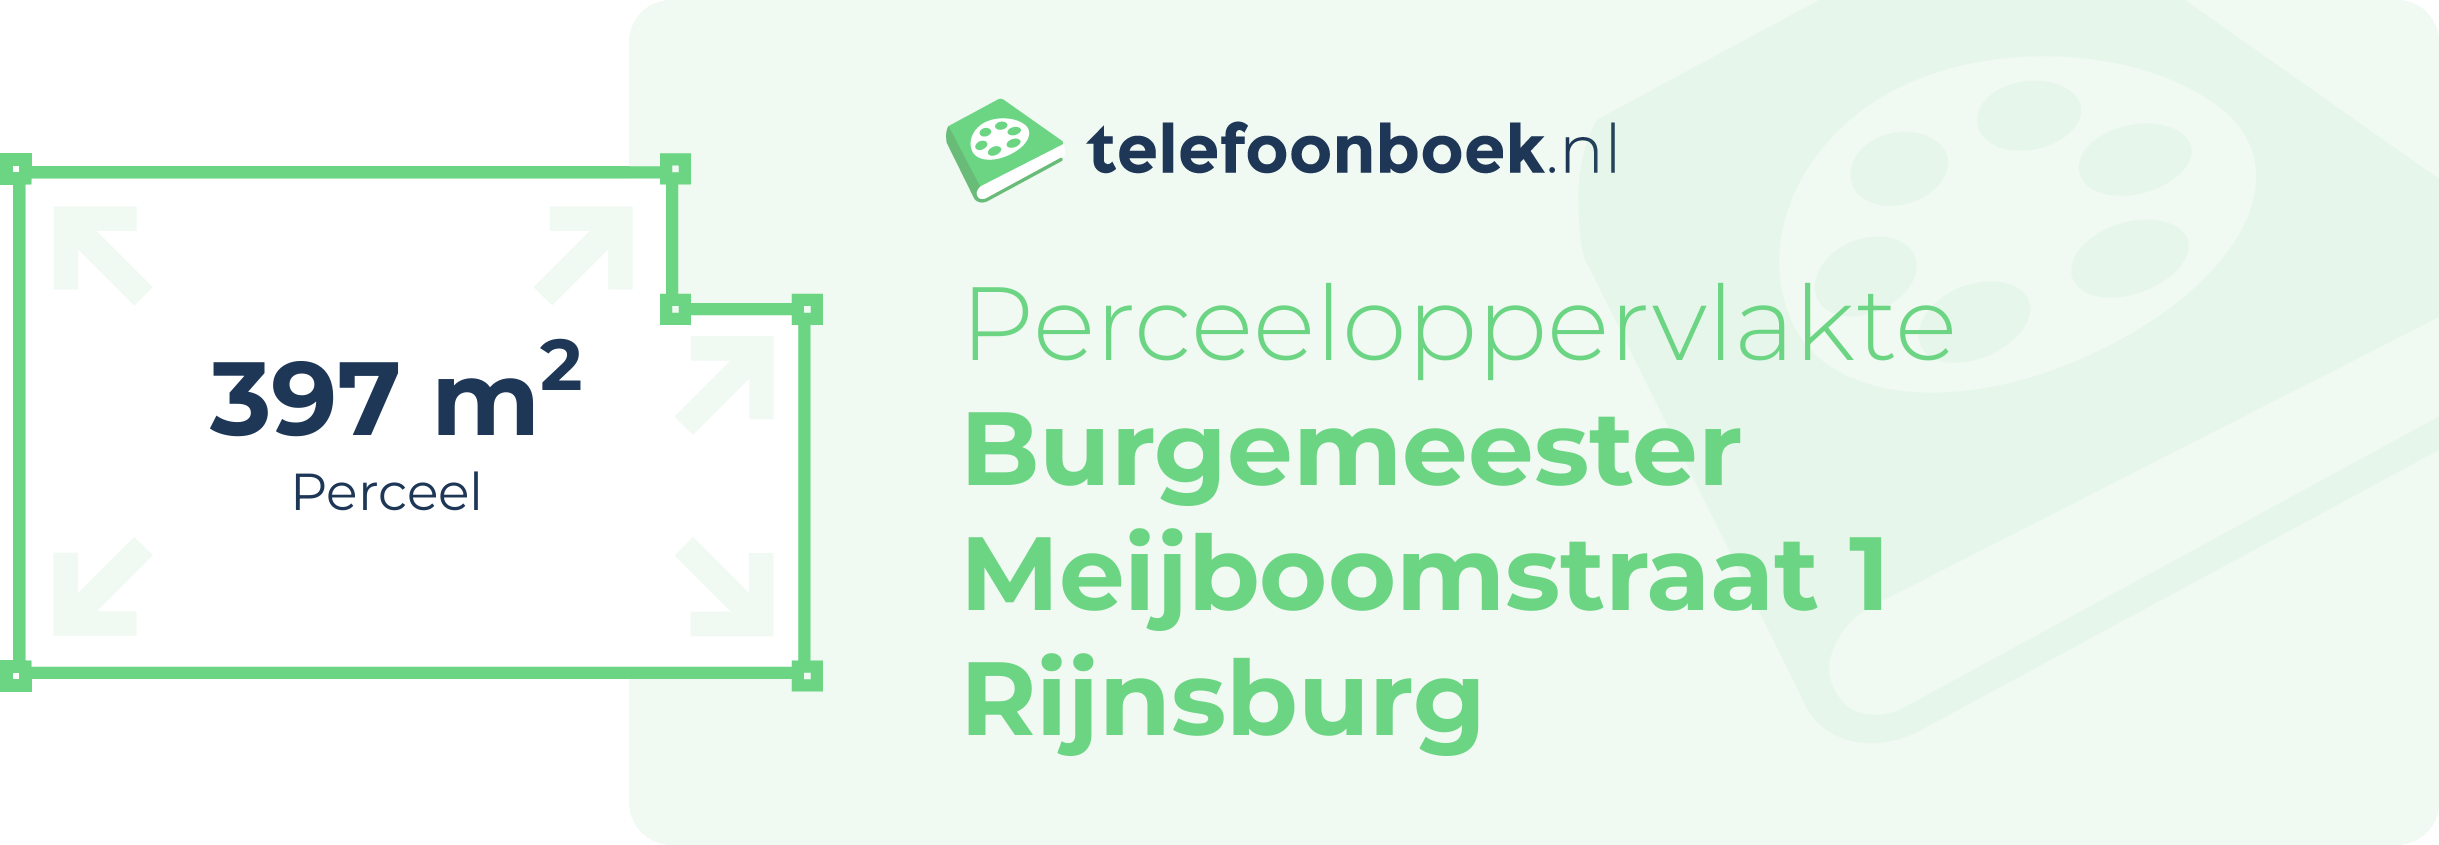 Perceeloppervlakte Burgemeester Meijboomstraat 1 Rijnsburg